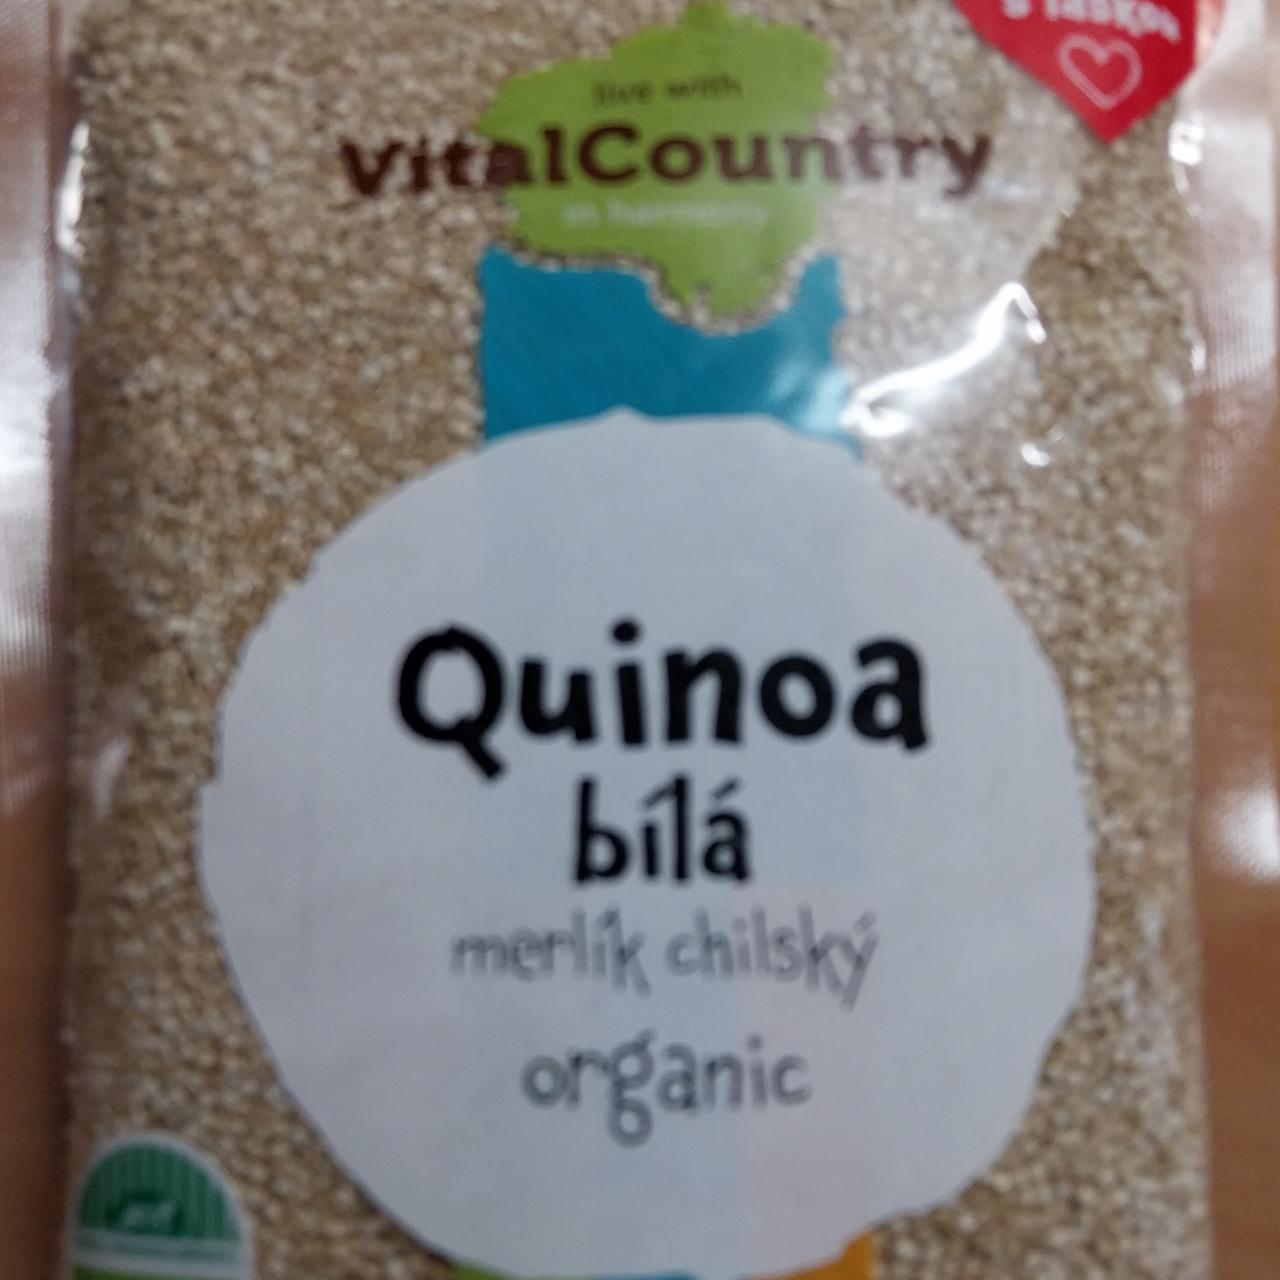 Fotografie - Quinoa bílá VitalCountry